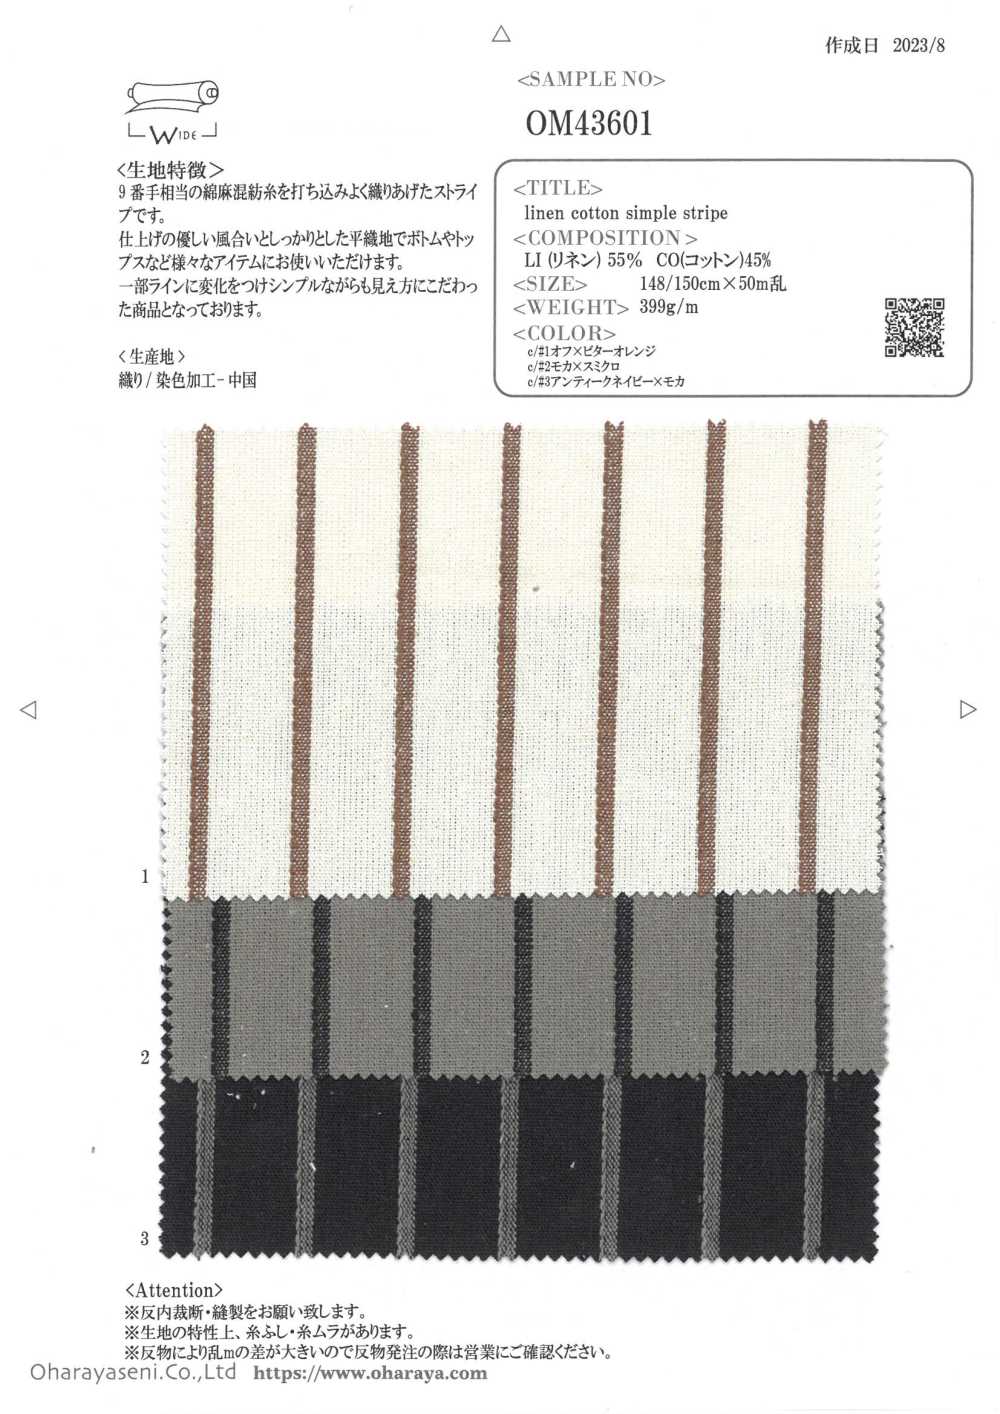 OM43601 Lin Coton Rayure Simple[Fabrication De Textile] Oharayaseni